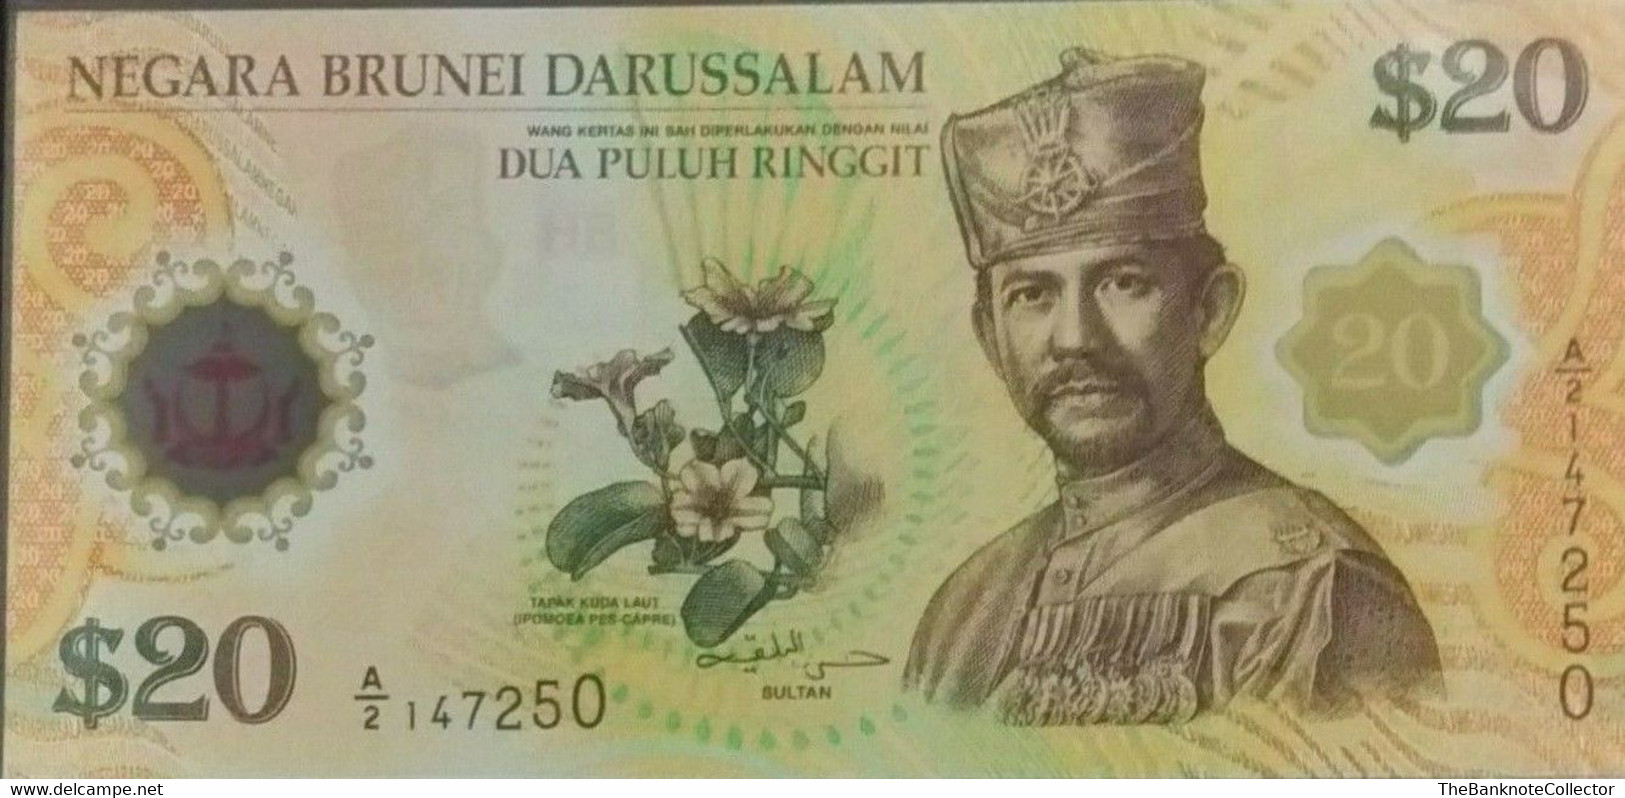 Brunei Darussalam 20 Ringgit 2007 Commemorative Polymer Issue 40th Anniv Currency Interchangeability  Prefix A/1 P-34 - Brunei